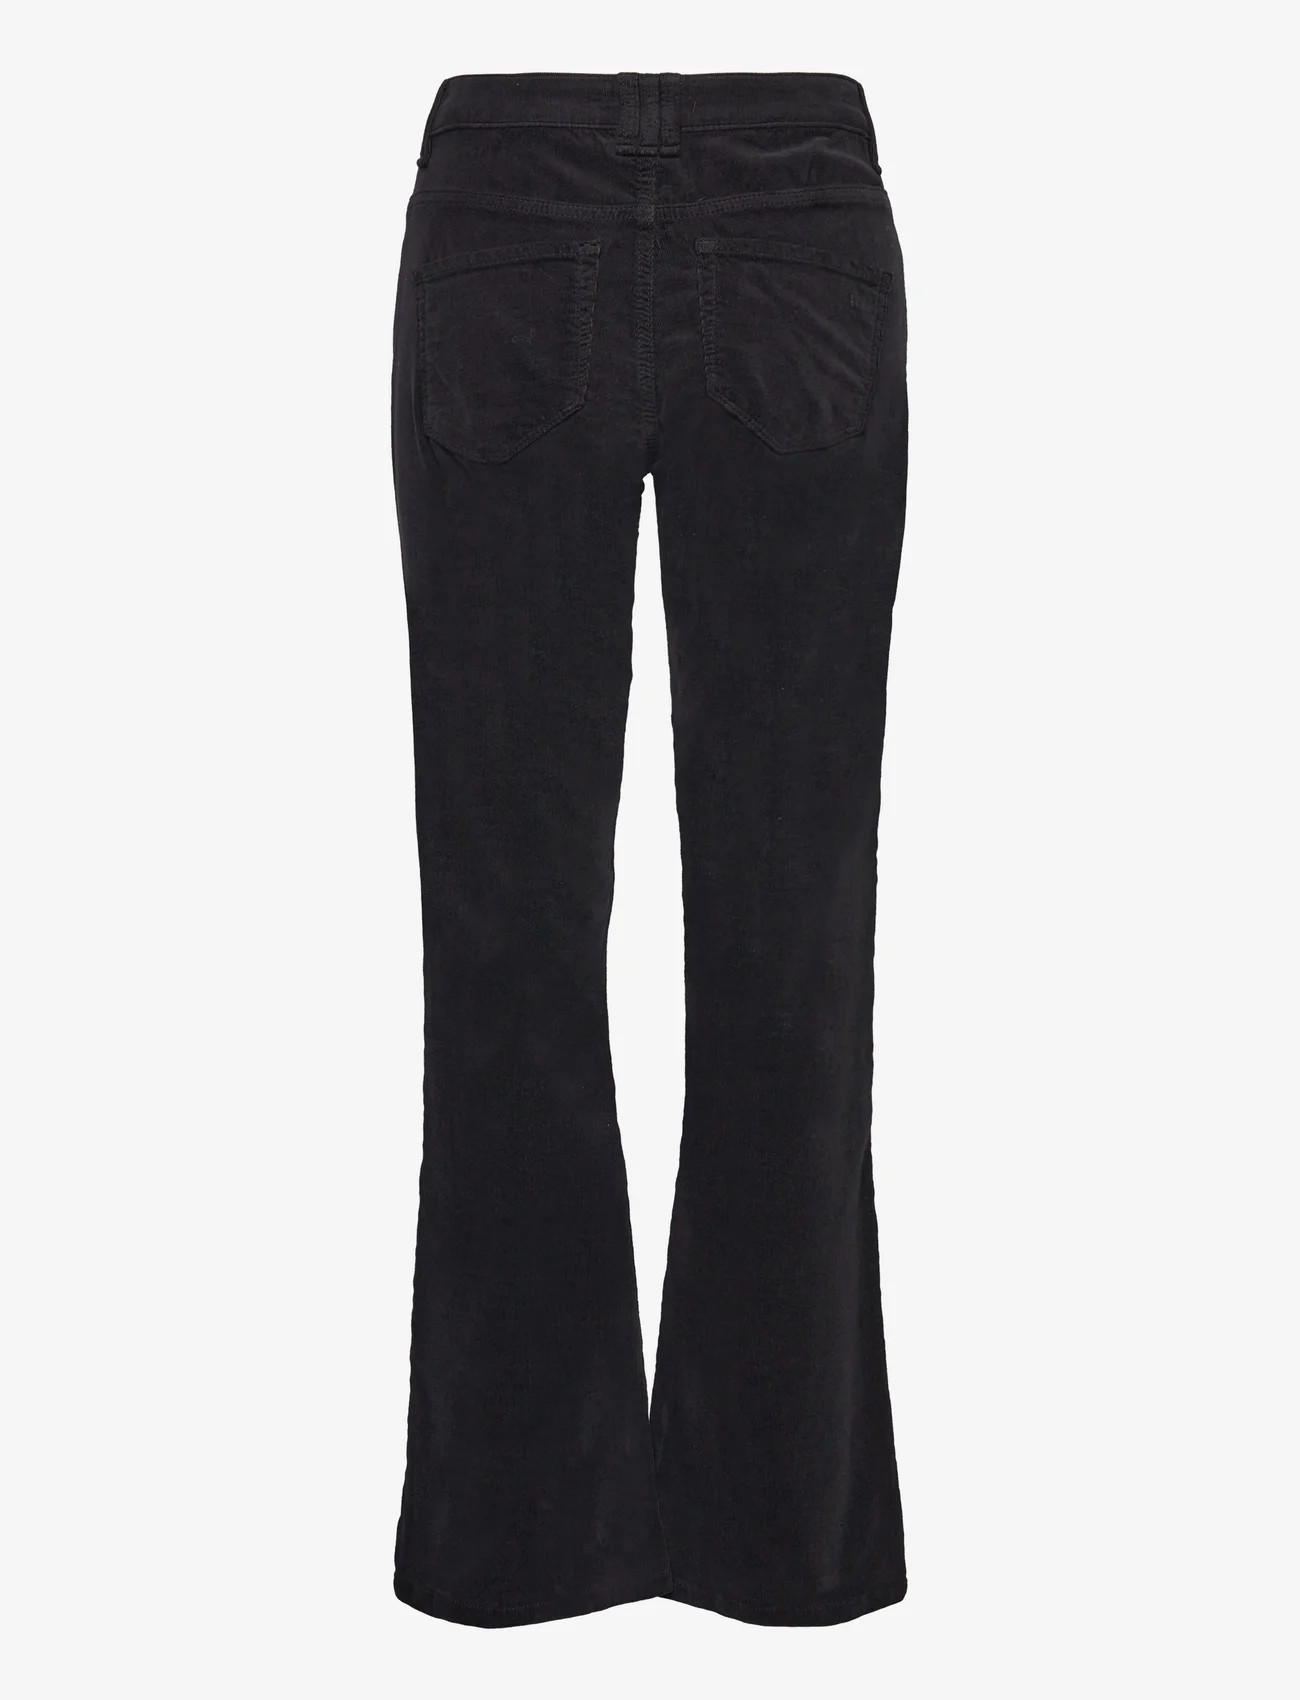 IVY Copenhagen - IVY-Tara Jeans Baby Cord - flared jeans - black - 1